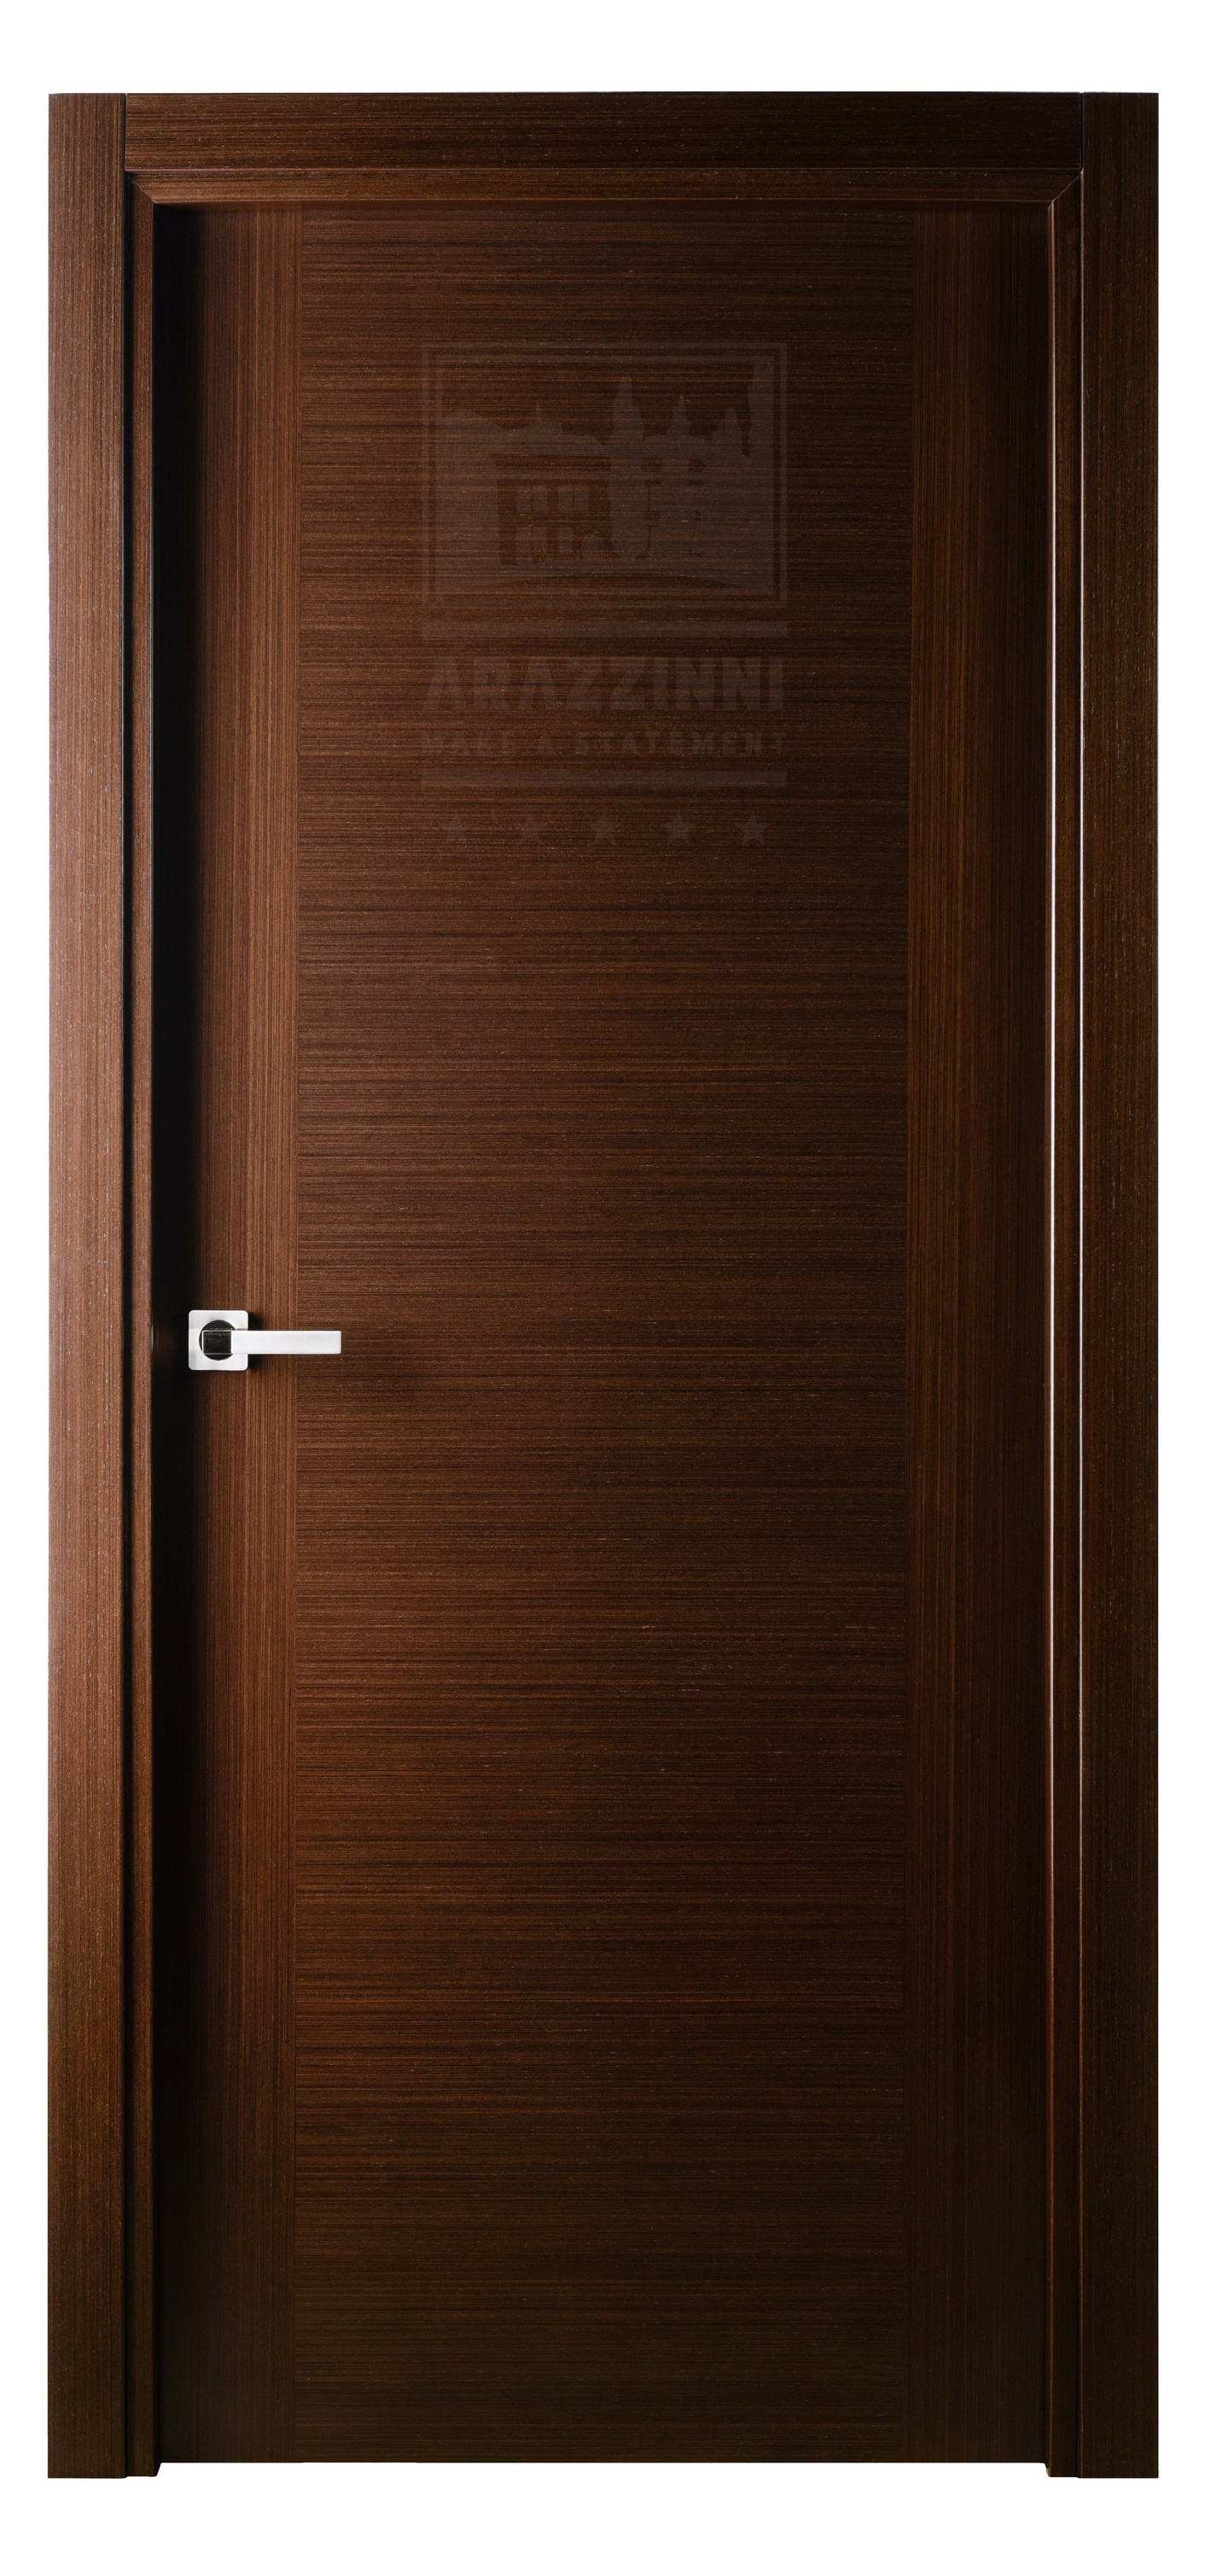 Versai Vetro Interior Door in Italian Wenge Finish | Exotic Wood ...